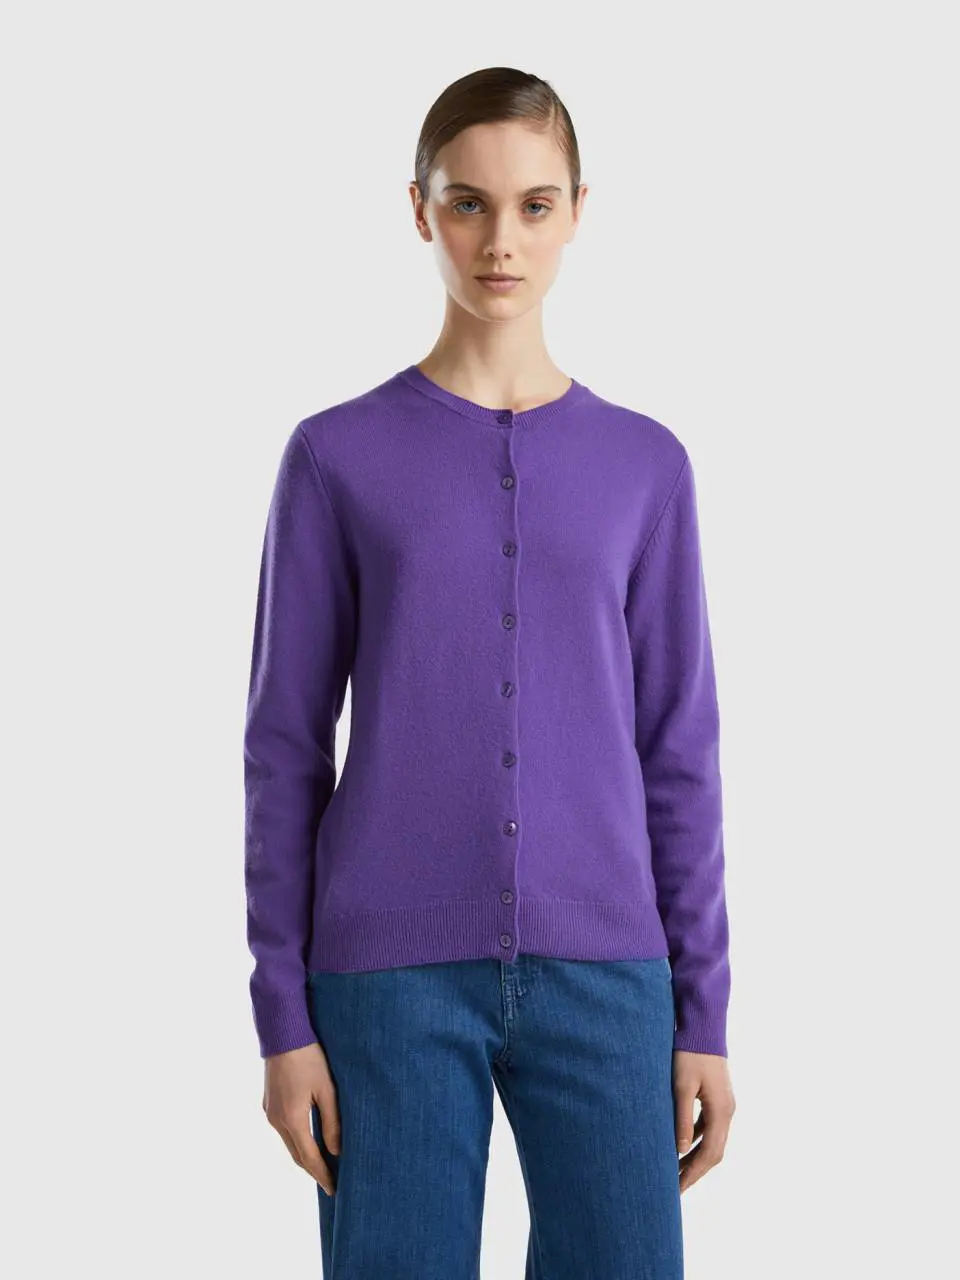 Benetton violet crew neck cardigan in pure merino wool. 1